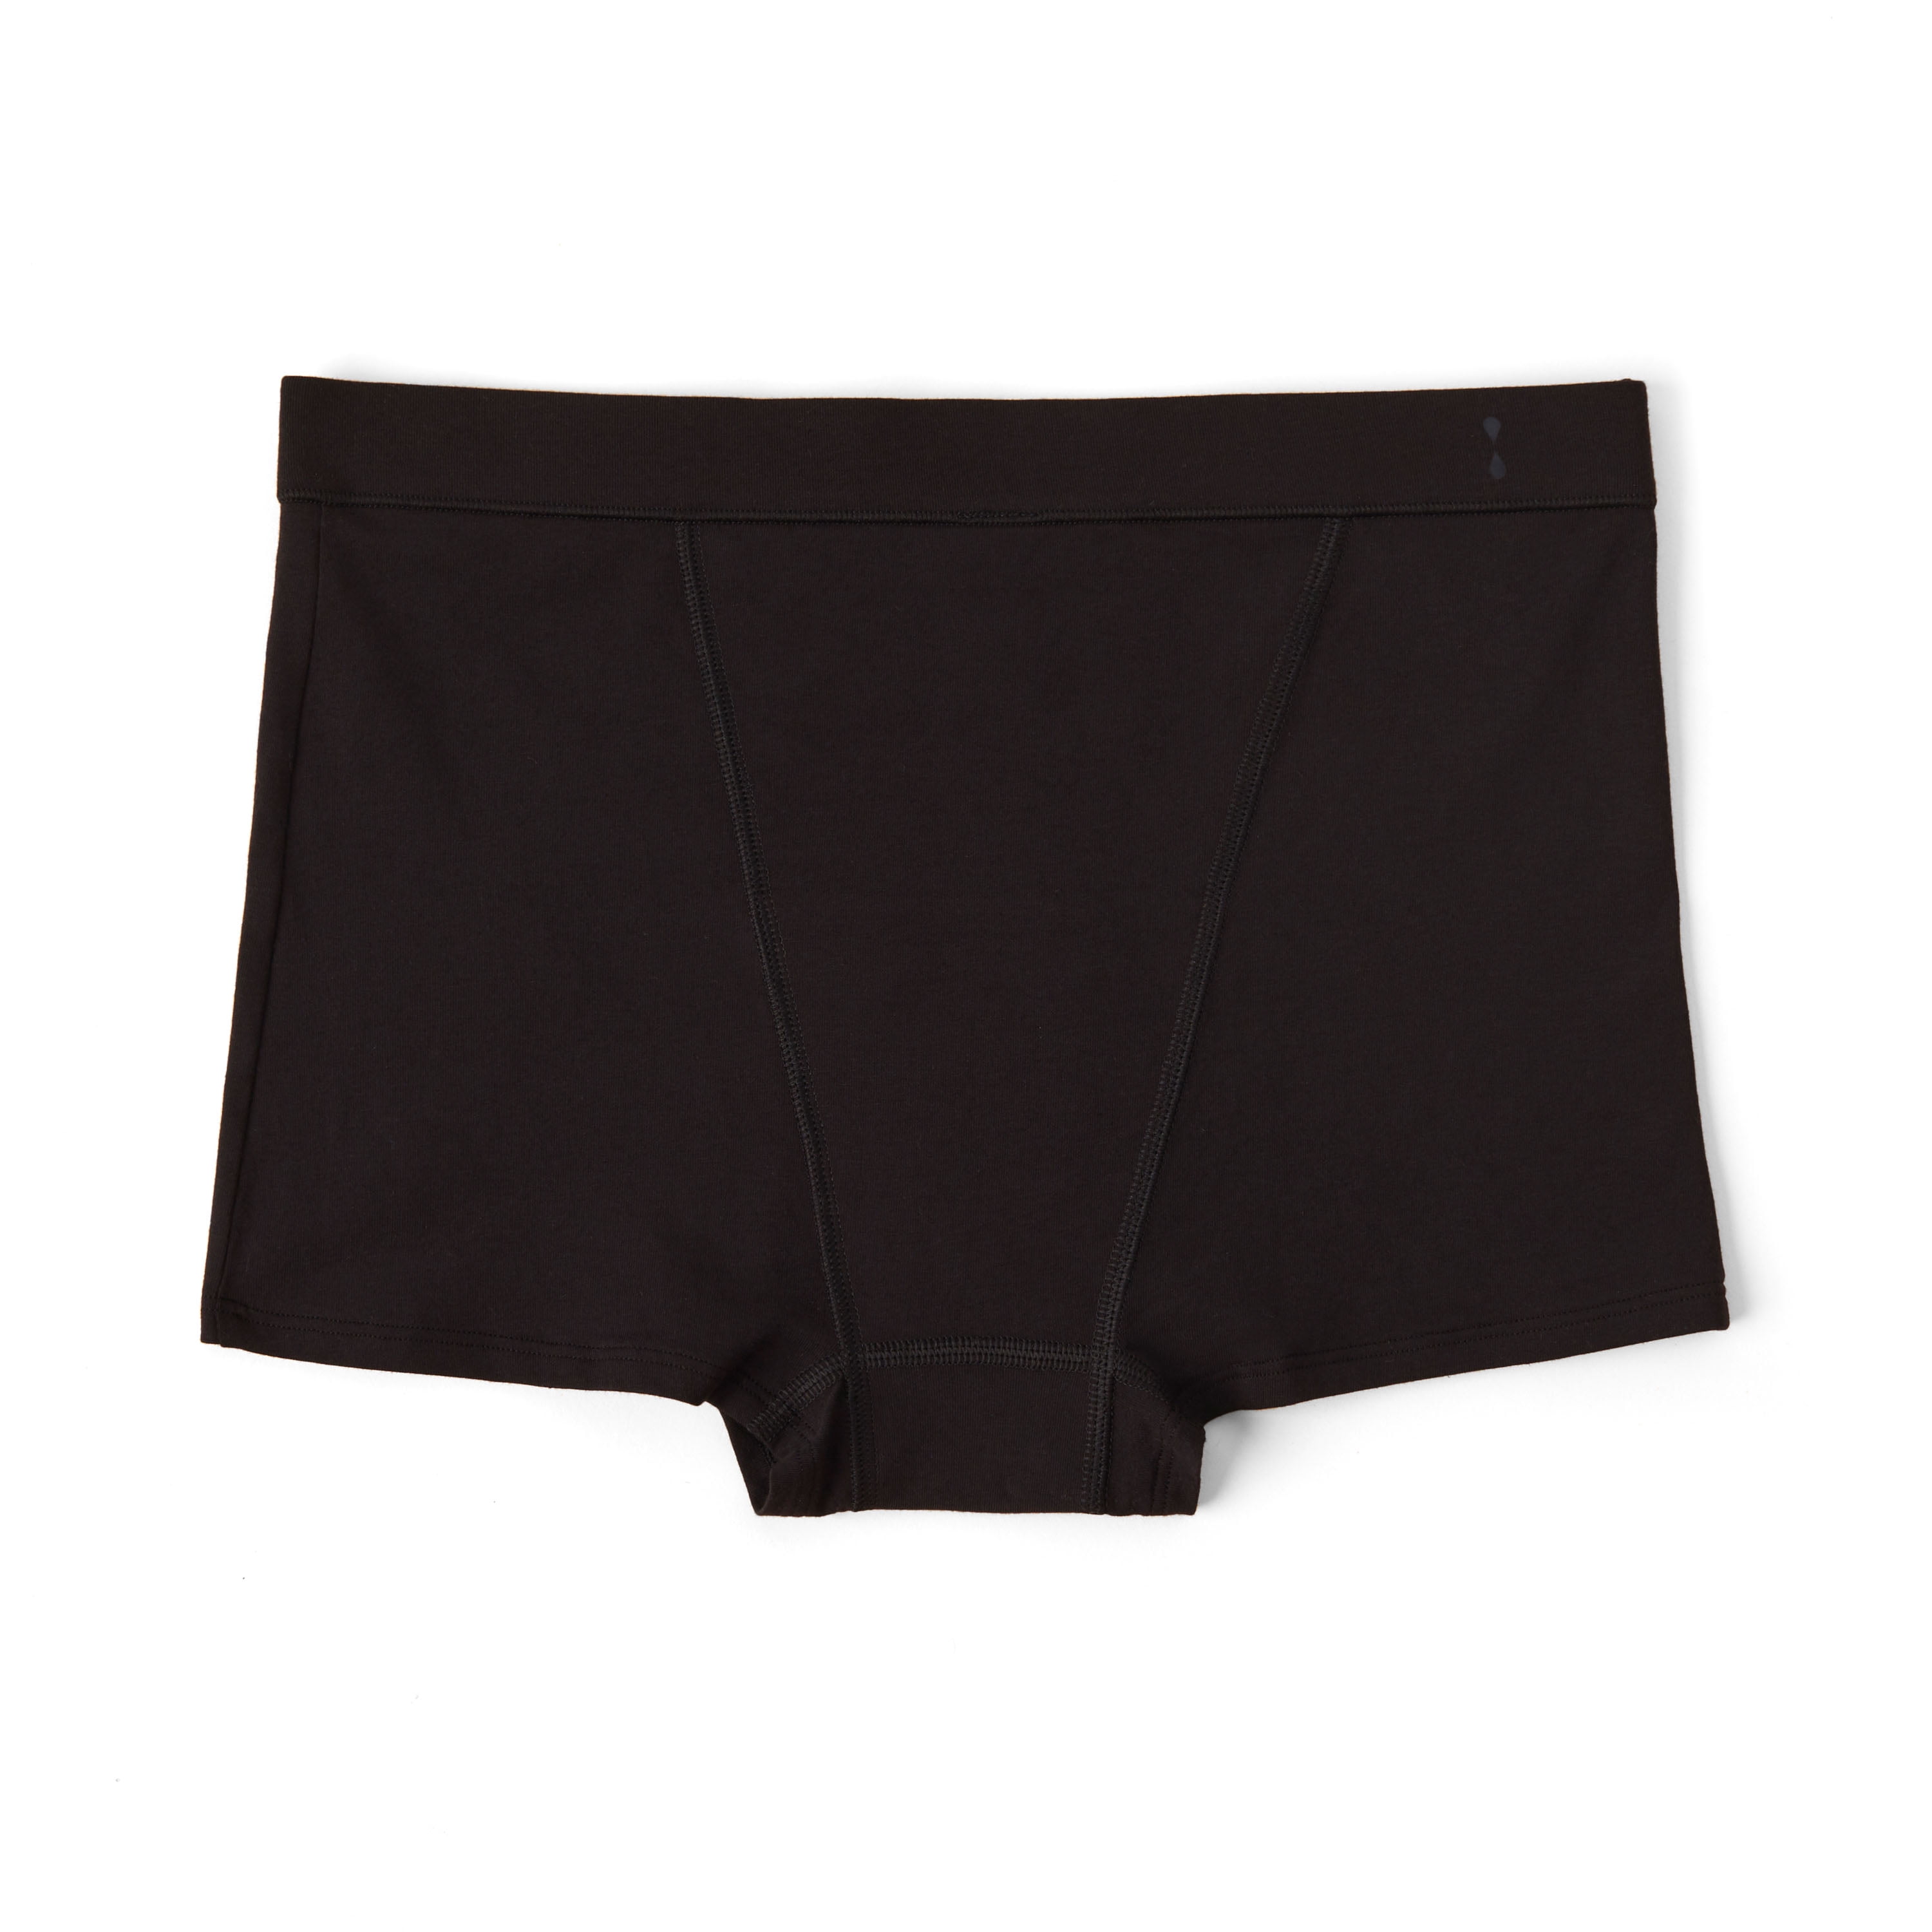 Thinx for All™ Women's Boyshort Period Underwear, Moderate Absorbency, Black  